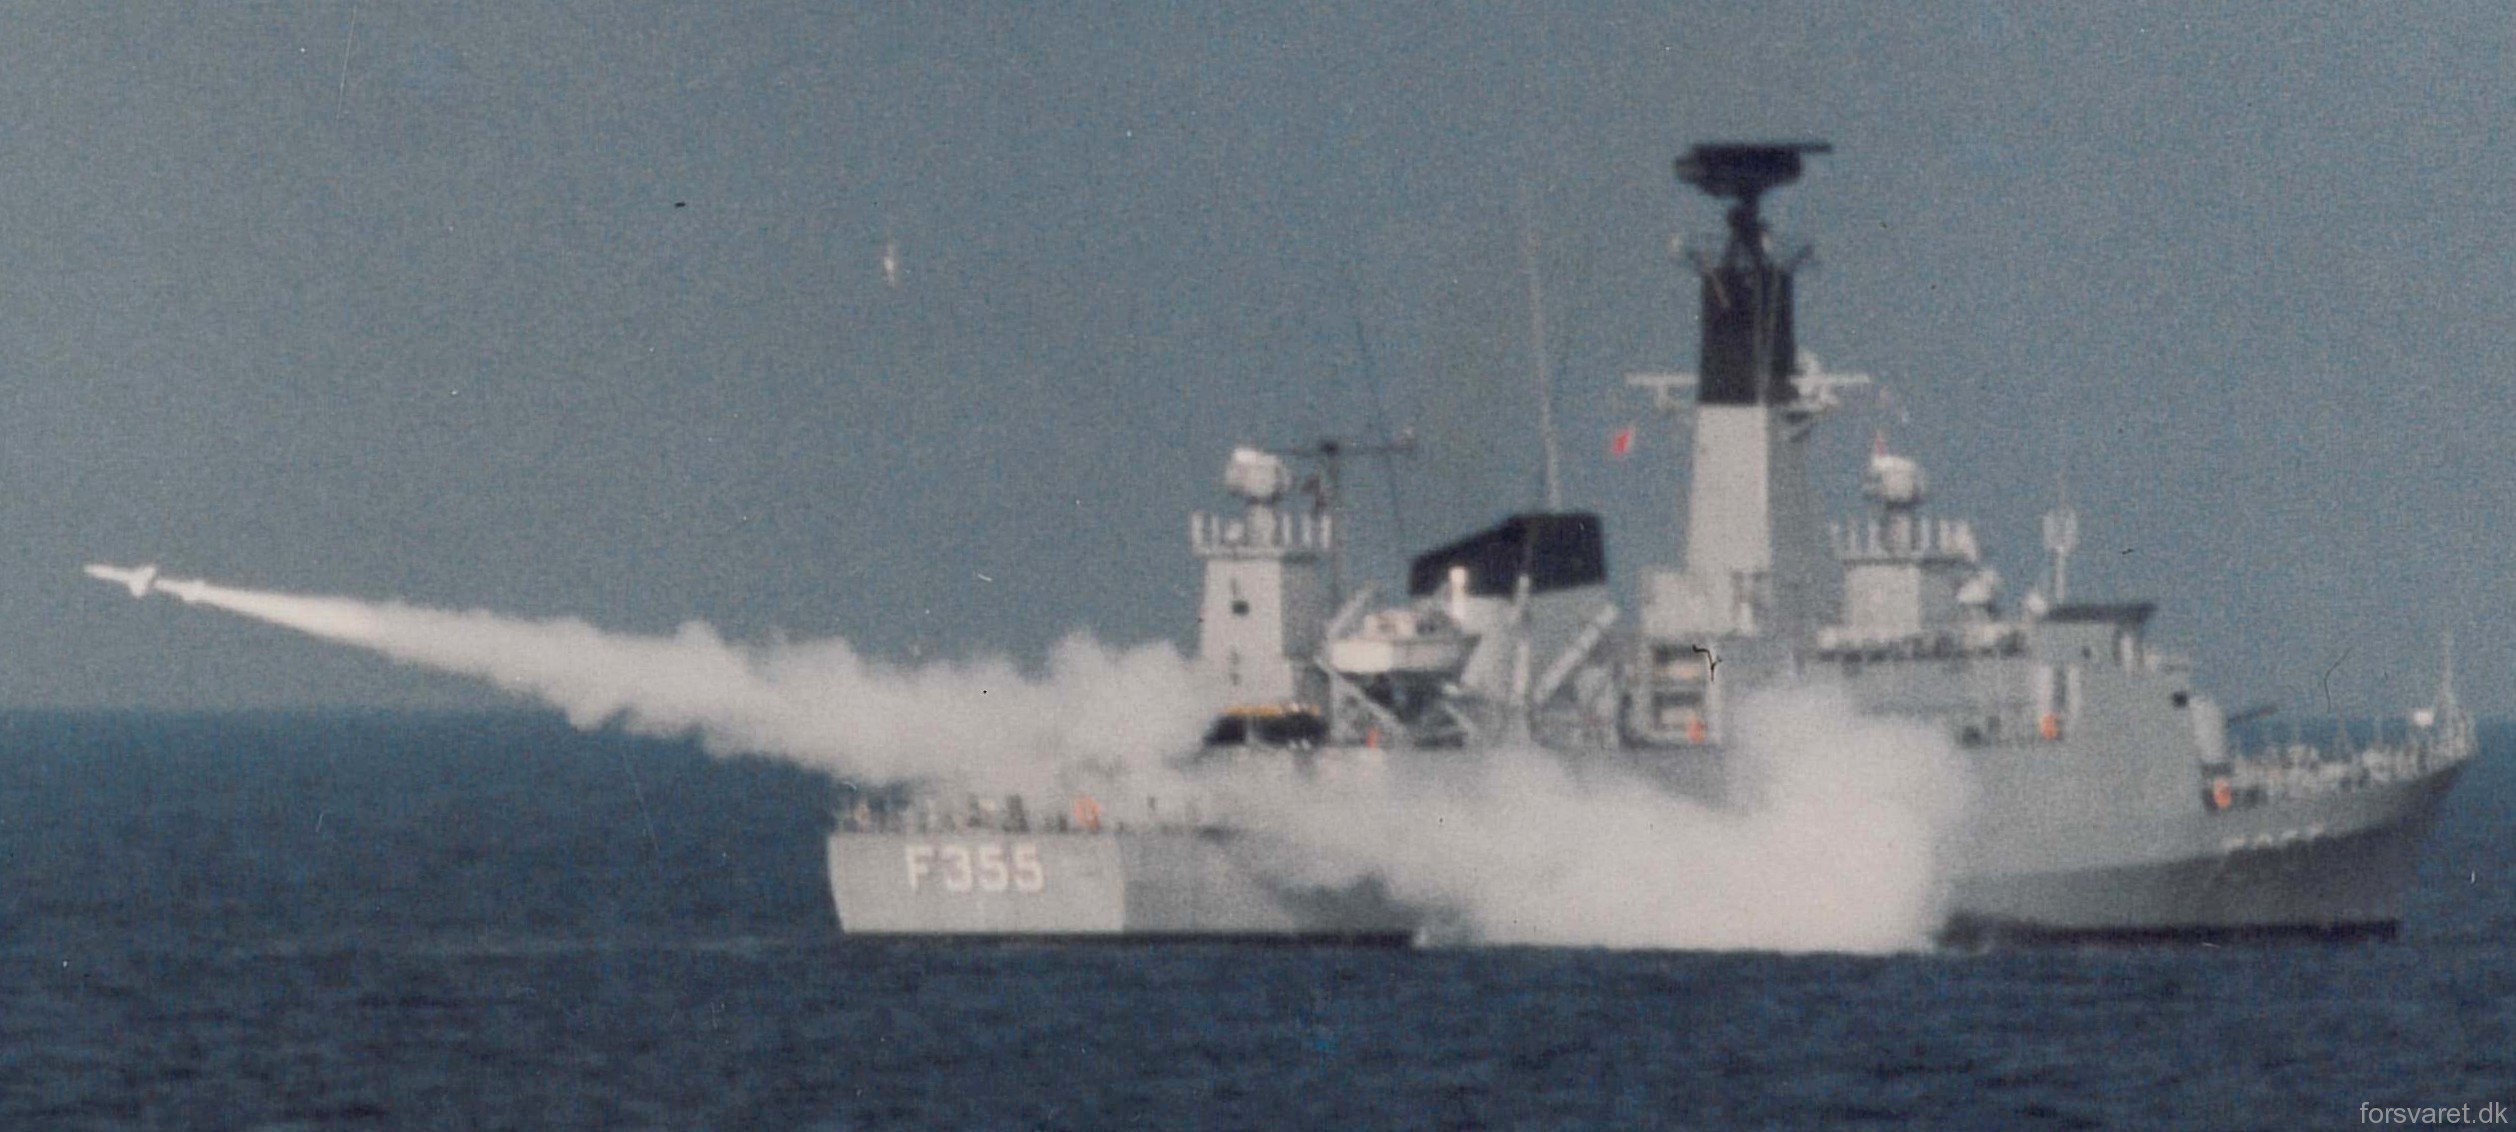 f-355 hdms olfert fischer niels juel class corvette royal danish navy rdn kongelige danske marine kdm 22 rim-7 sea sparrow nssm missile